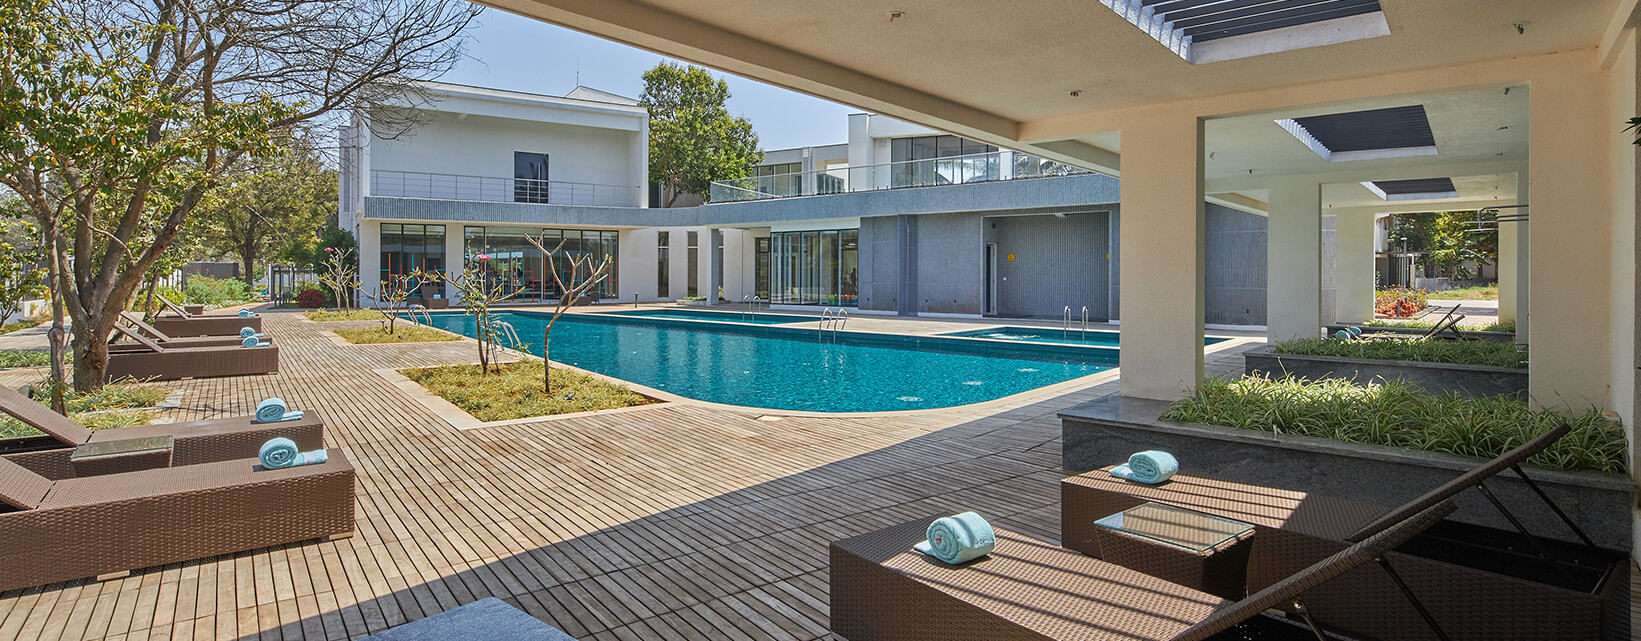 Under the Sun - luxury villas in bangalore